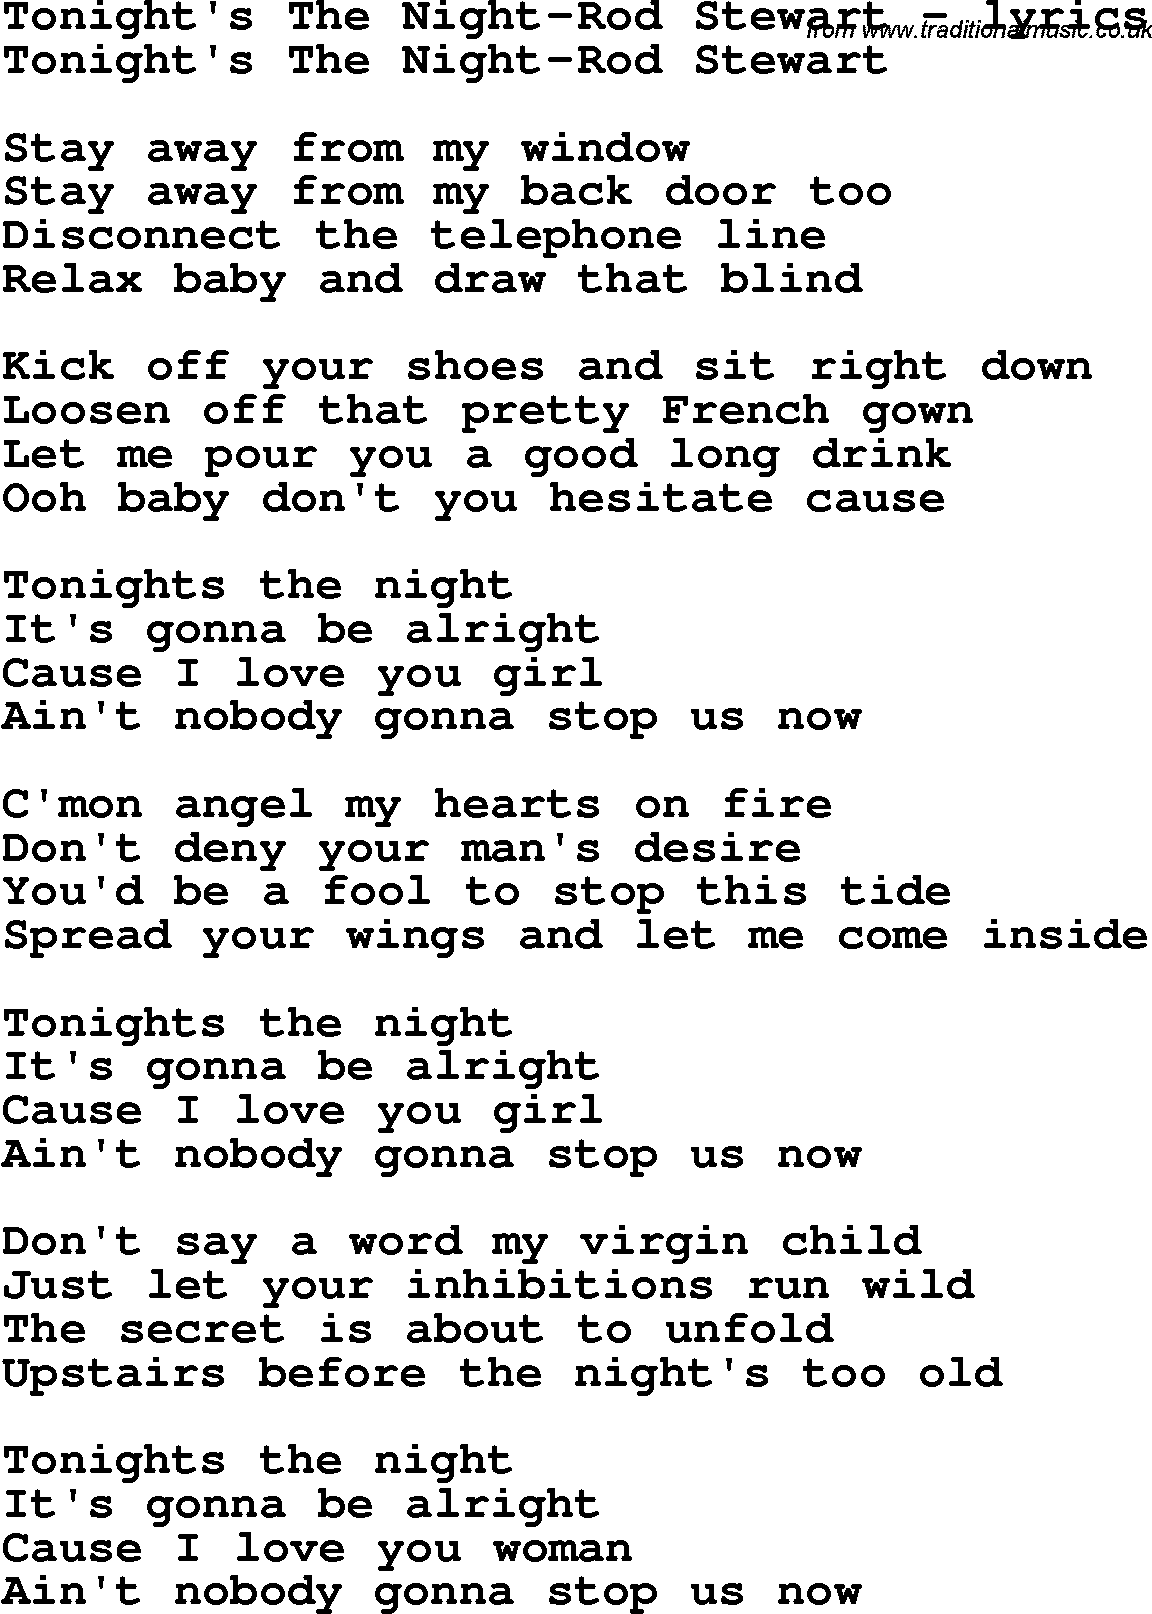 Love Song Lyrics for: Tonight's The Night-Rod Stewart